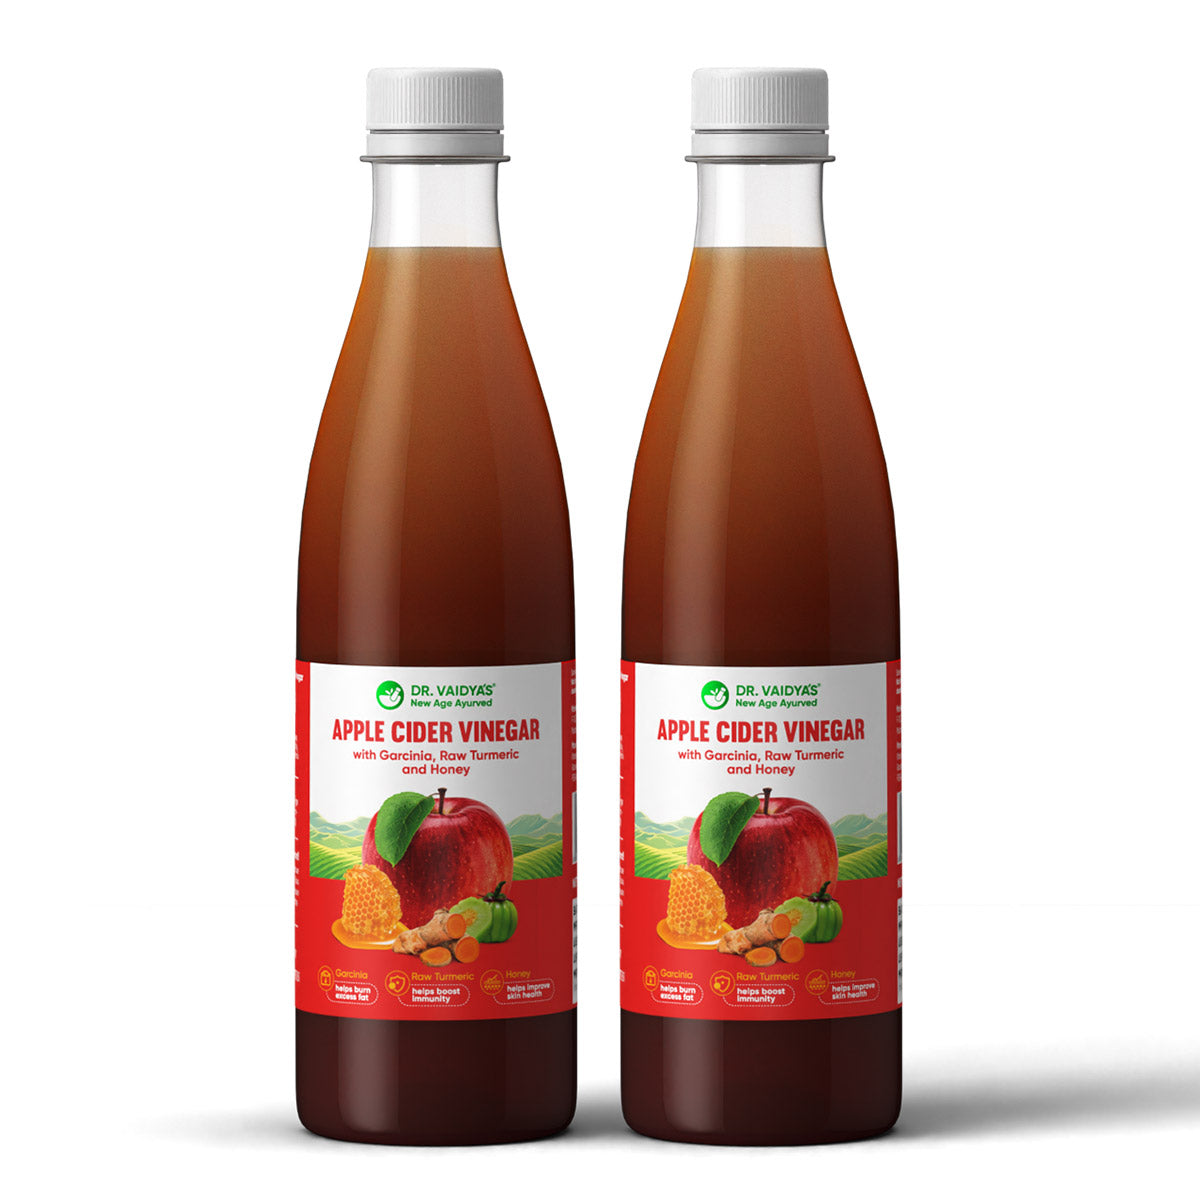 First-Ever Ayurvedic Apple Cider Vinegar With Garcinia, Raw Turmeric & Honey by Dr. Vaidya’s (ACV juice )